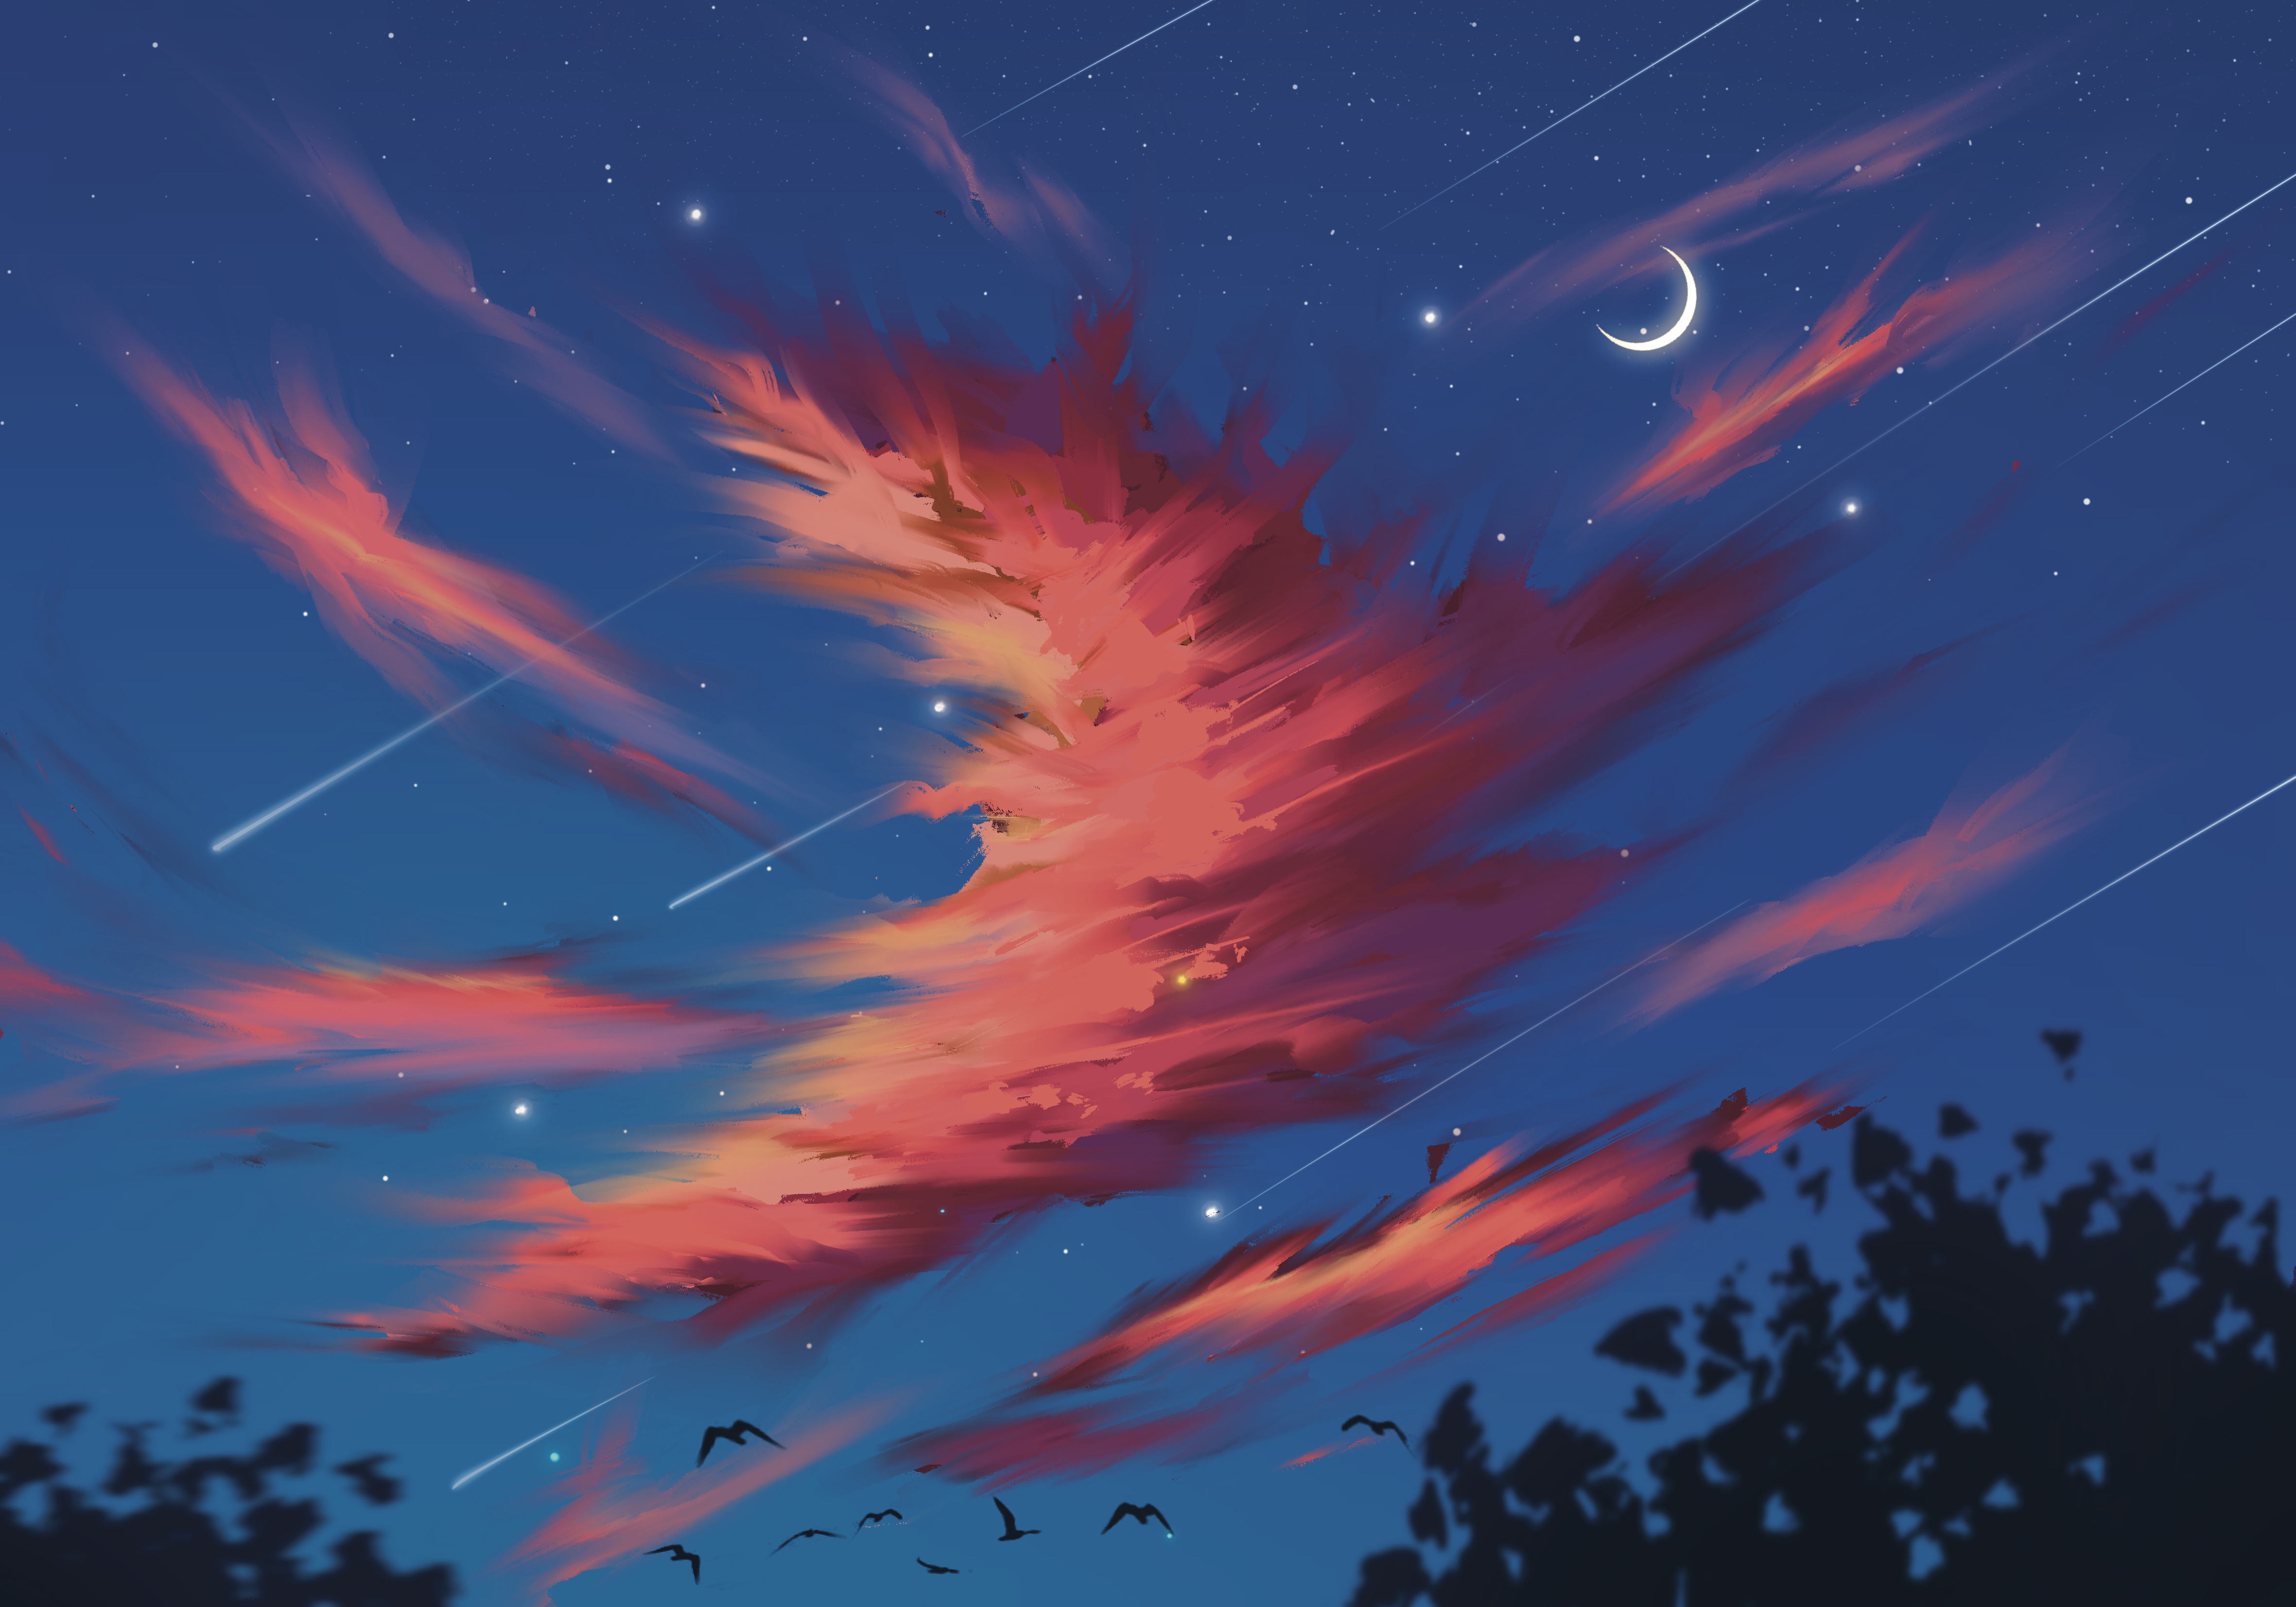 Digital Art Artwork Illustration Painting Sky Clouds Moon Birds Animals Stars Shooting Stars 4724x3307